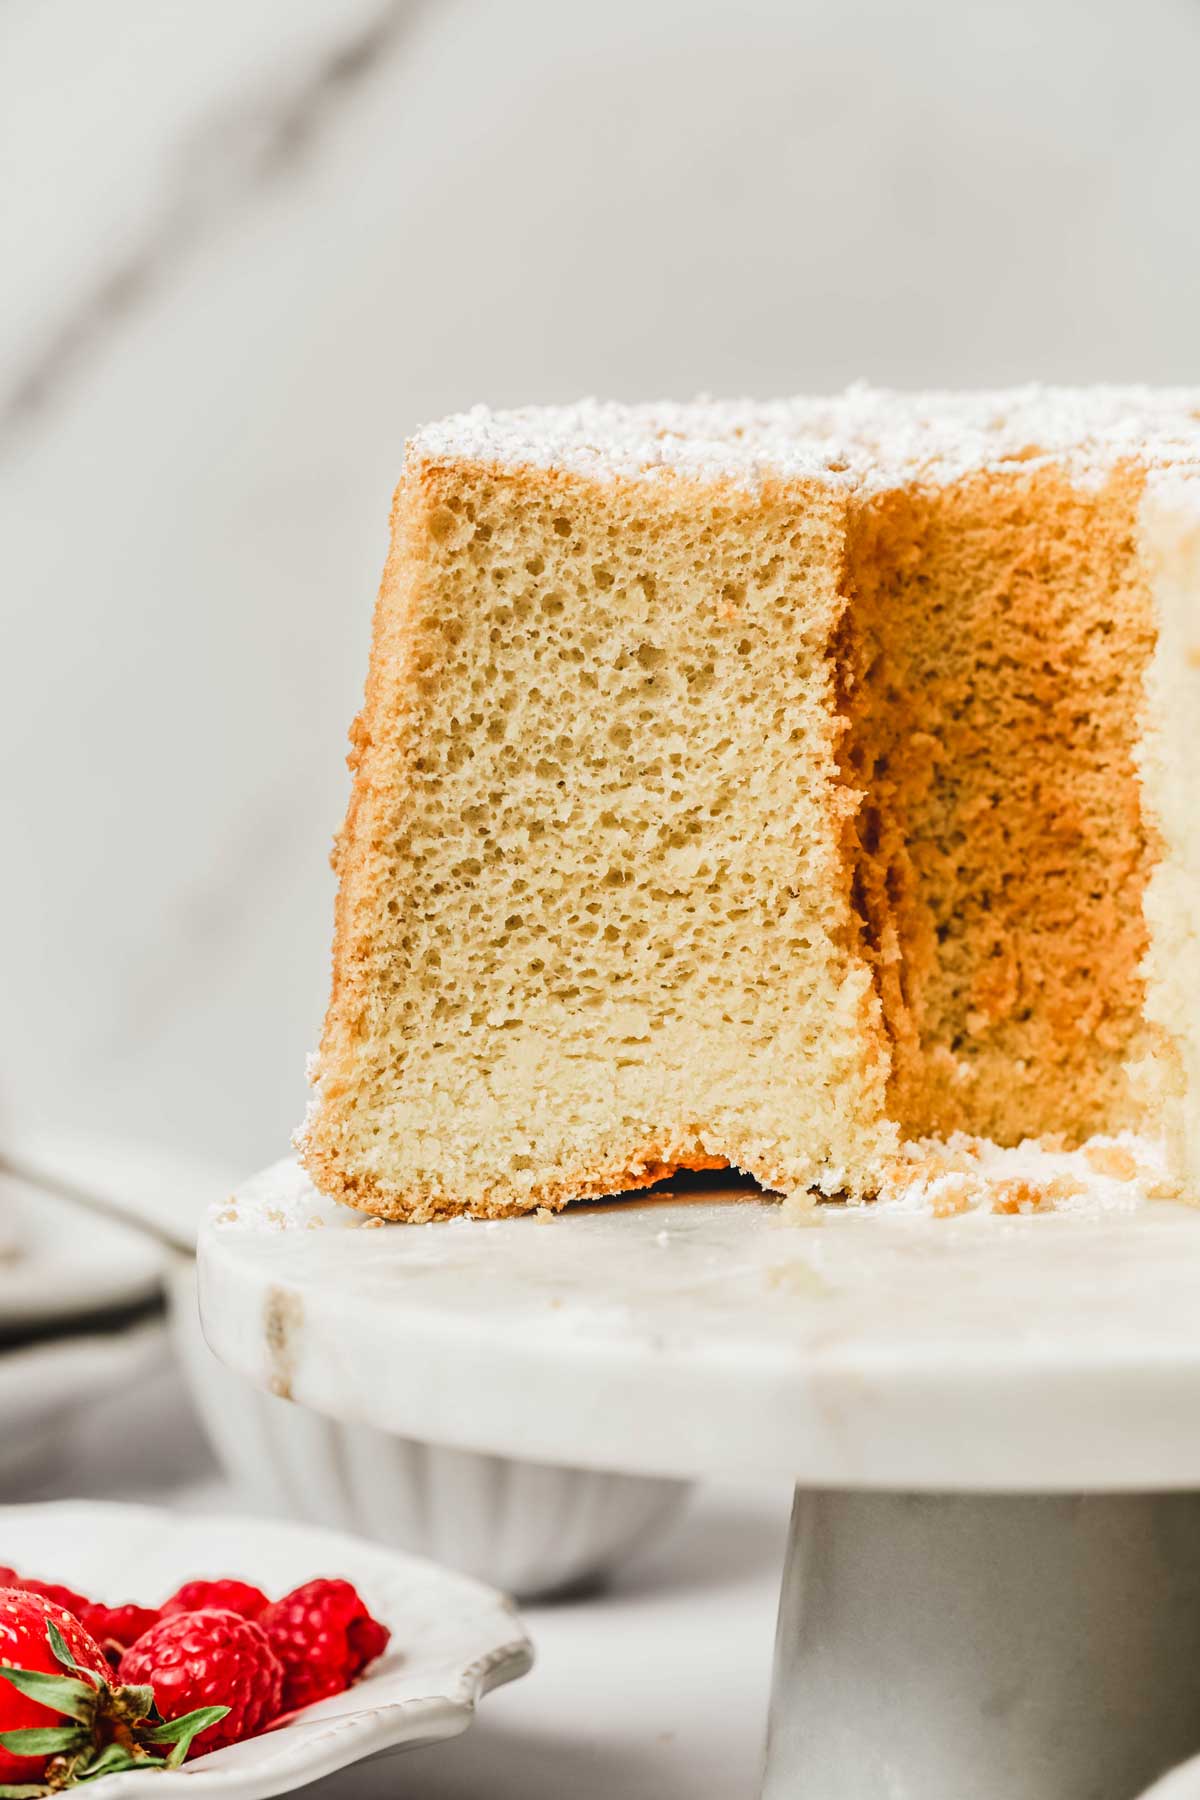 Vanilla Chiffon Cake - Baking Sense®